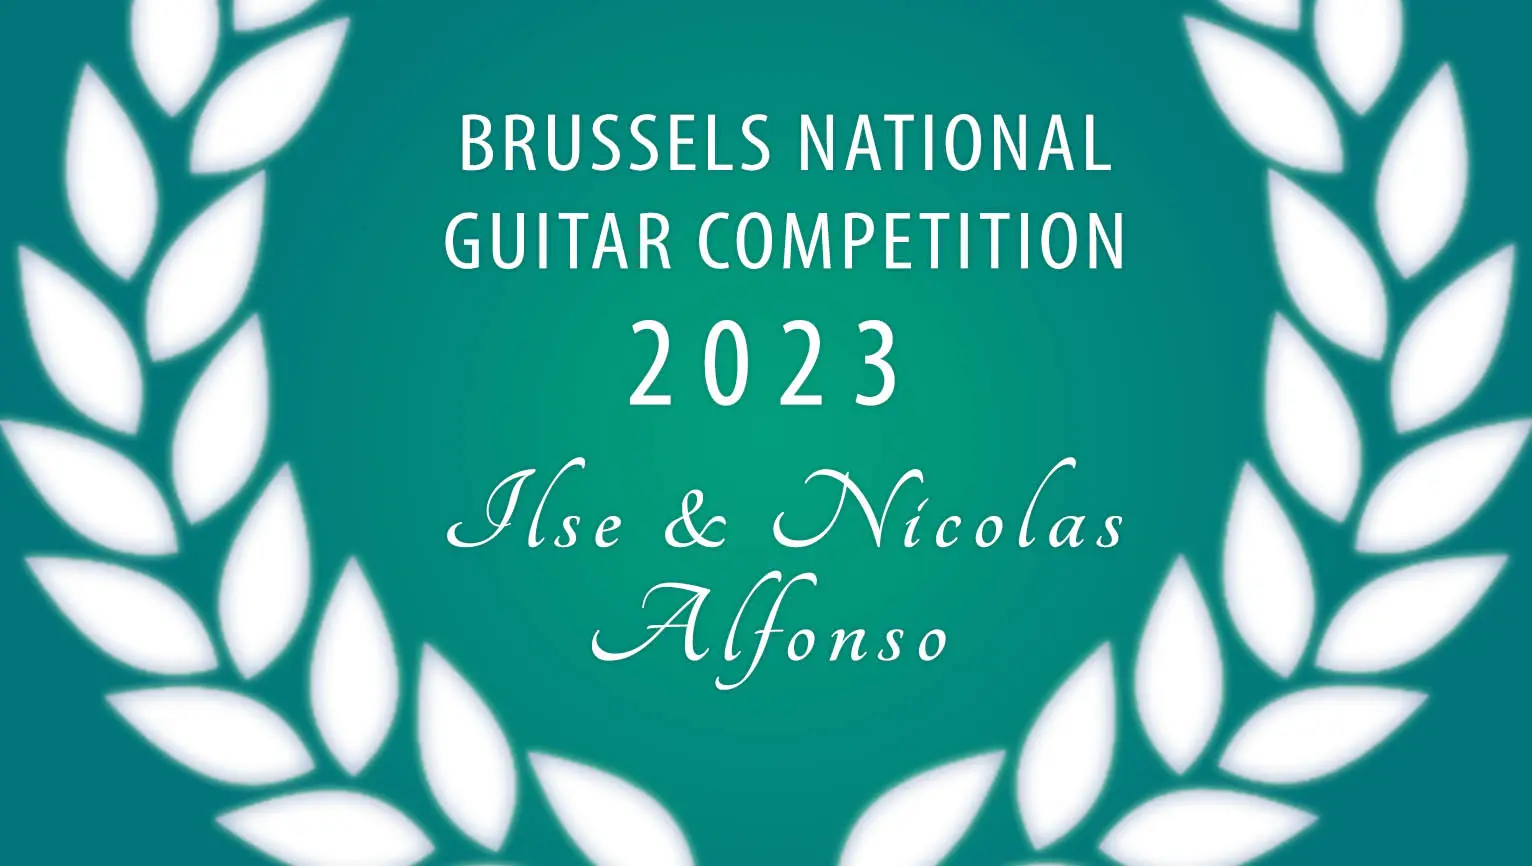 Brussels National Guitar Competition «&nbsp;Ilse&nbsp;&&nbsp;Nicolas&nbsp;Alfonso&nbsp;» (Saturday 25 November 2023 - 09:00)